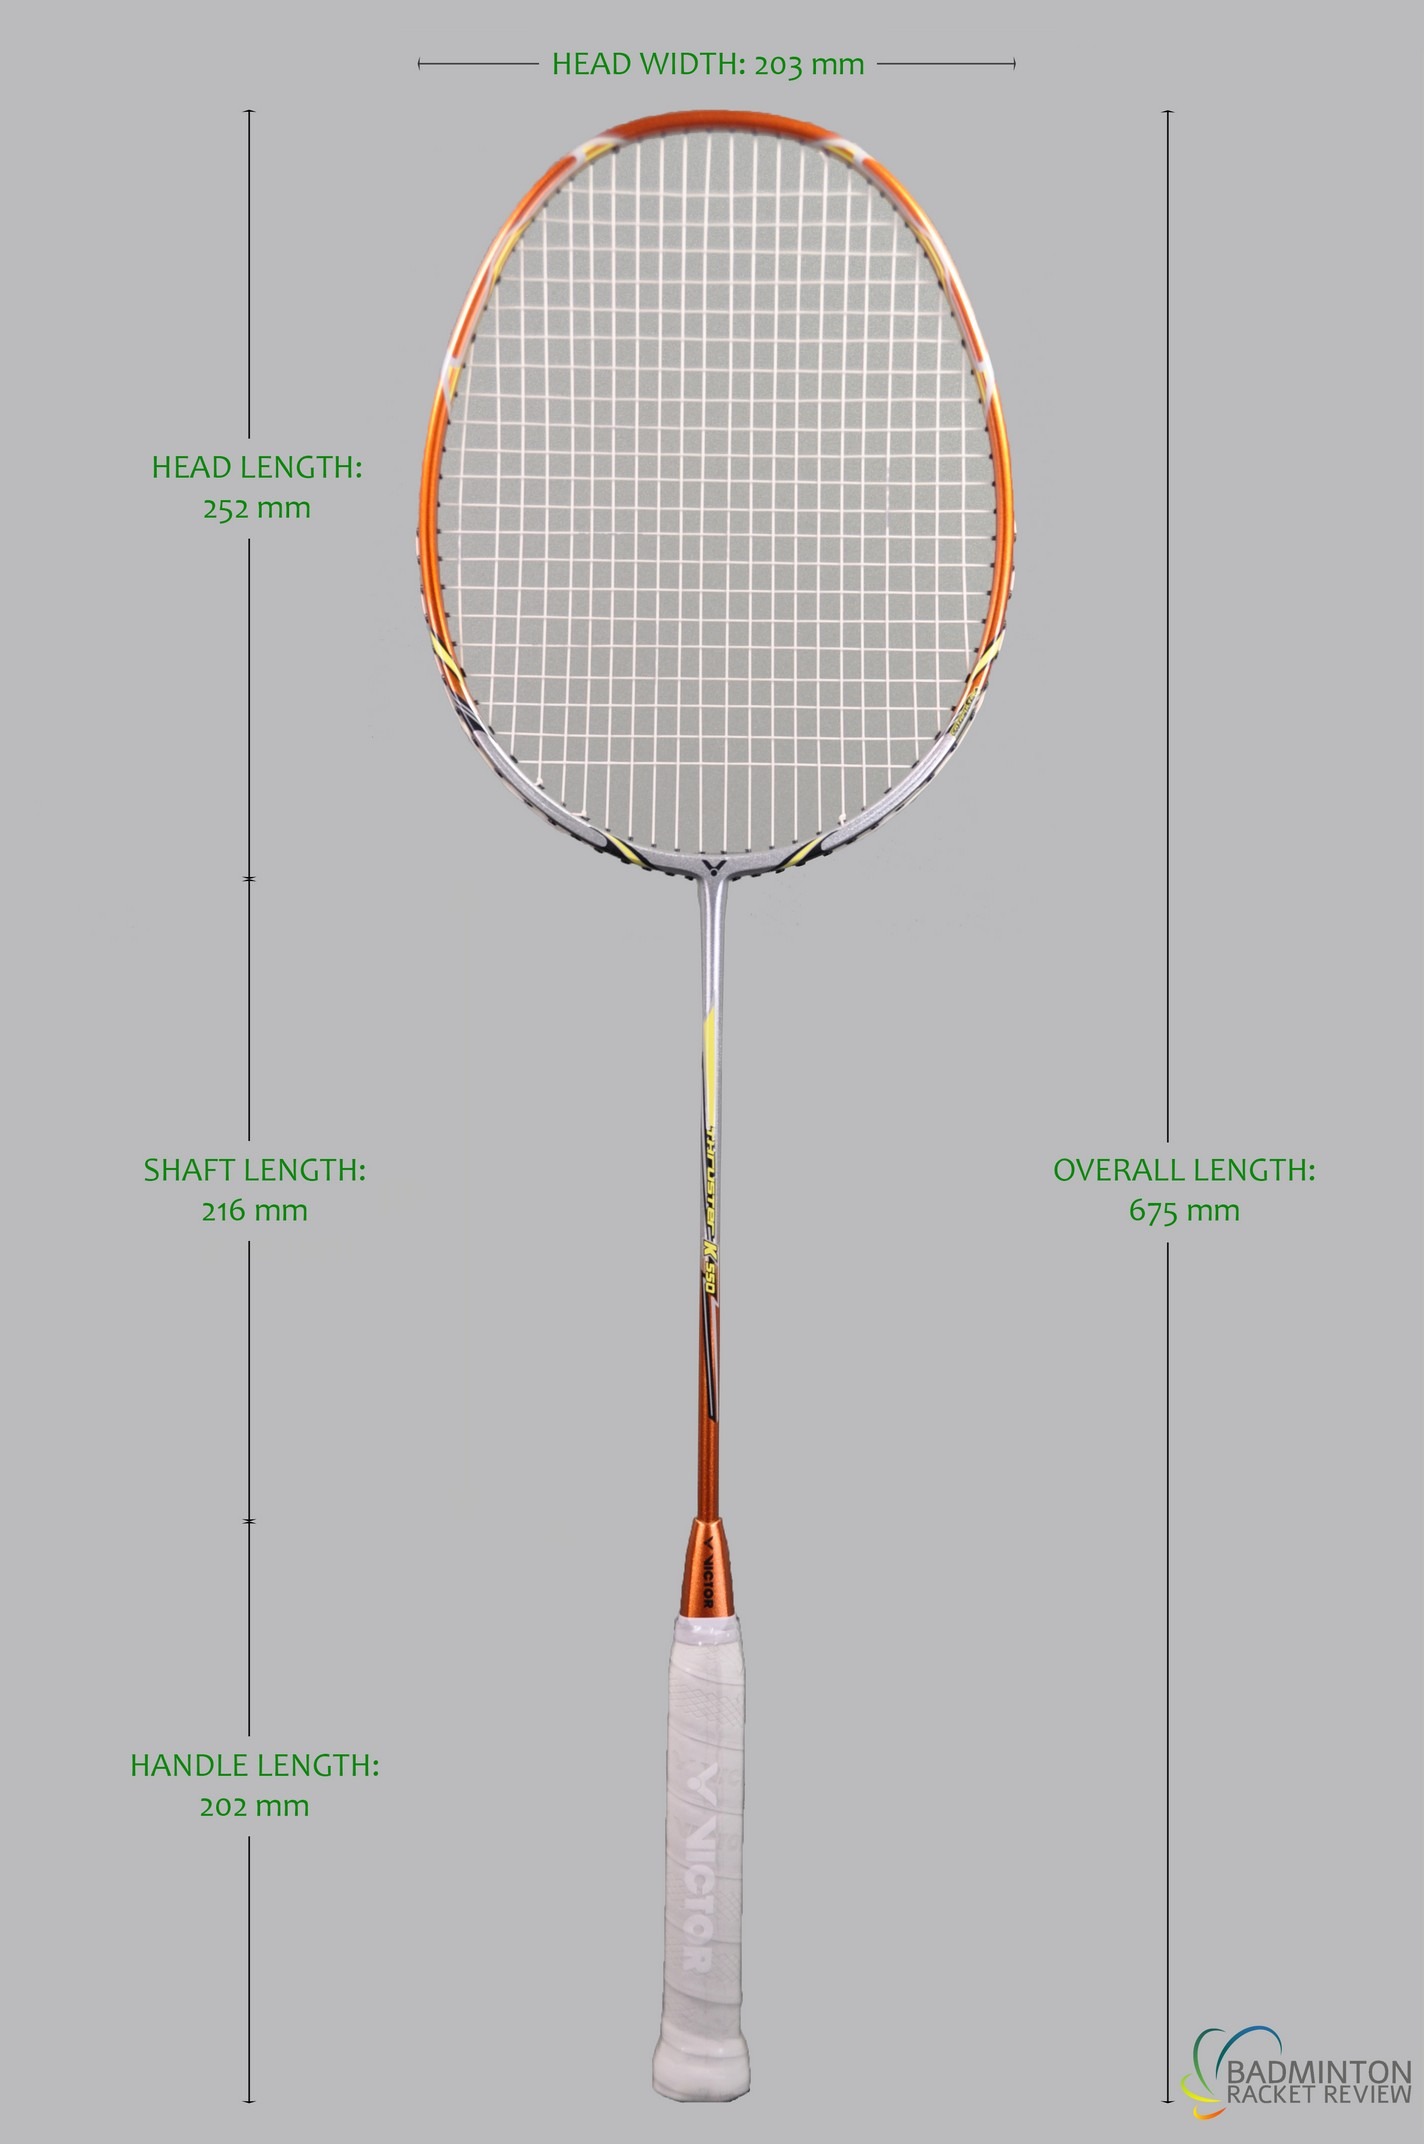 victor racket chart